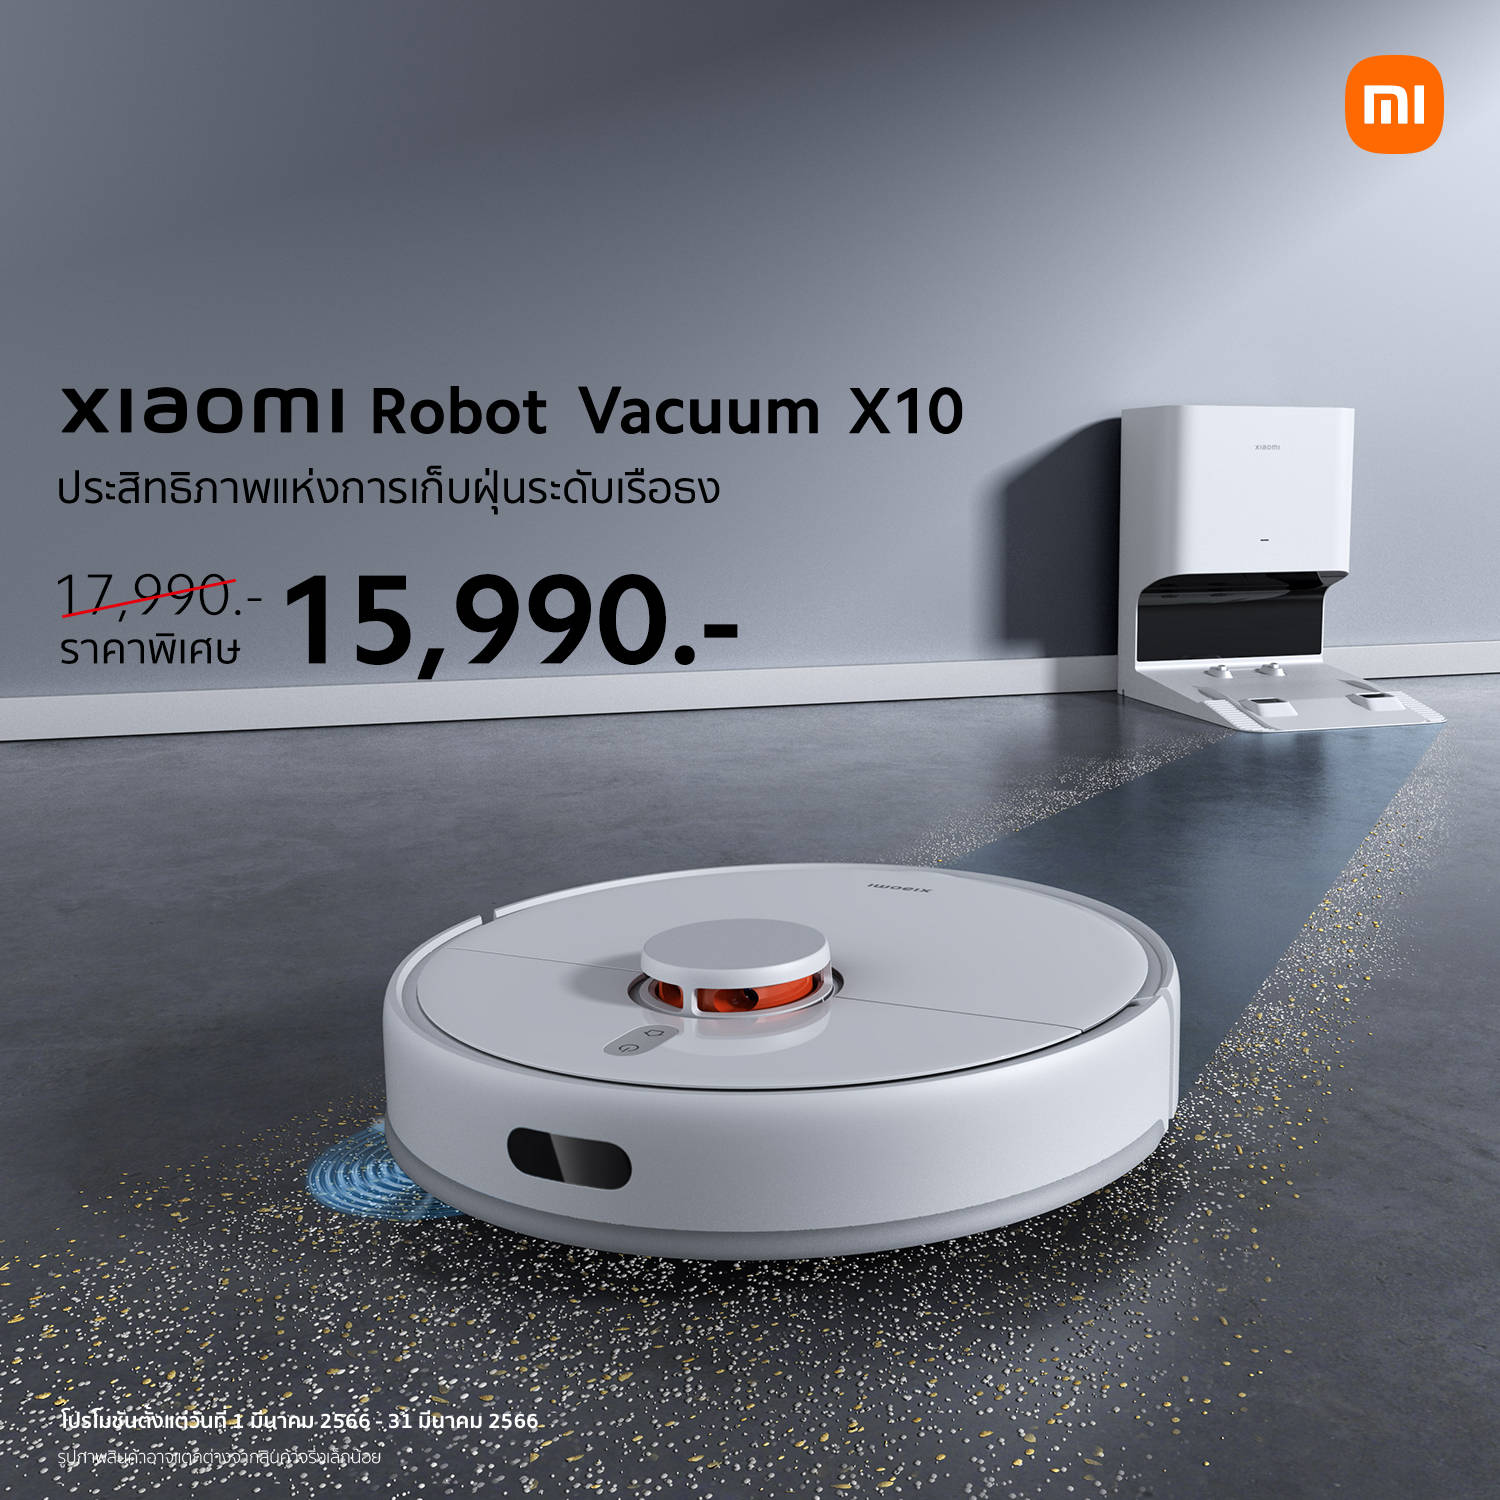 xiaomi-robot-vacuum-x10-kv